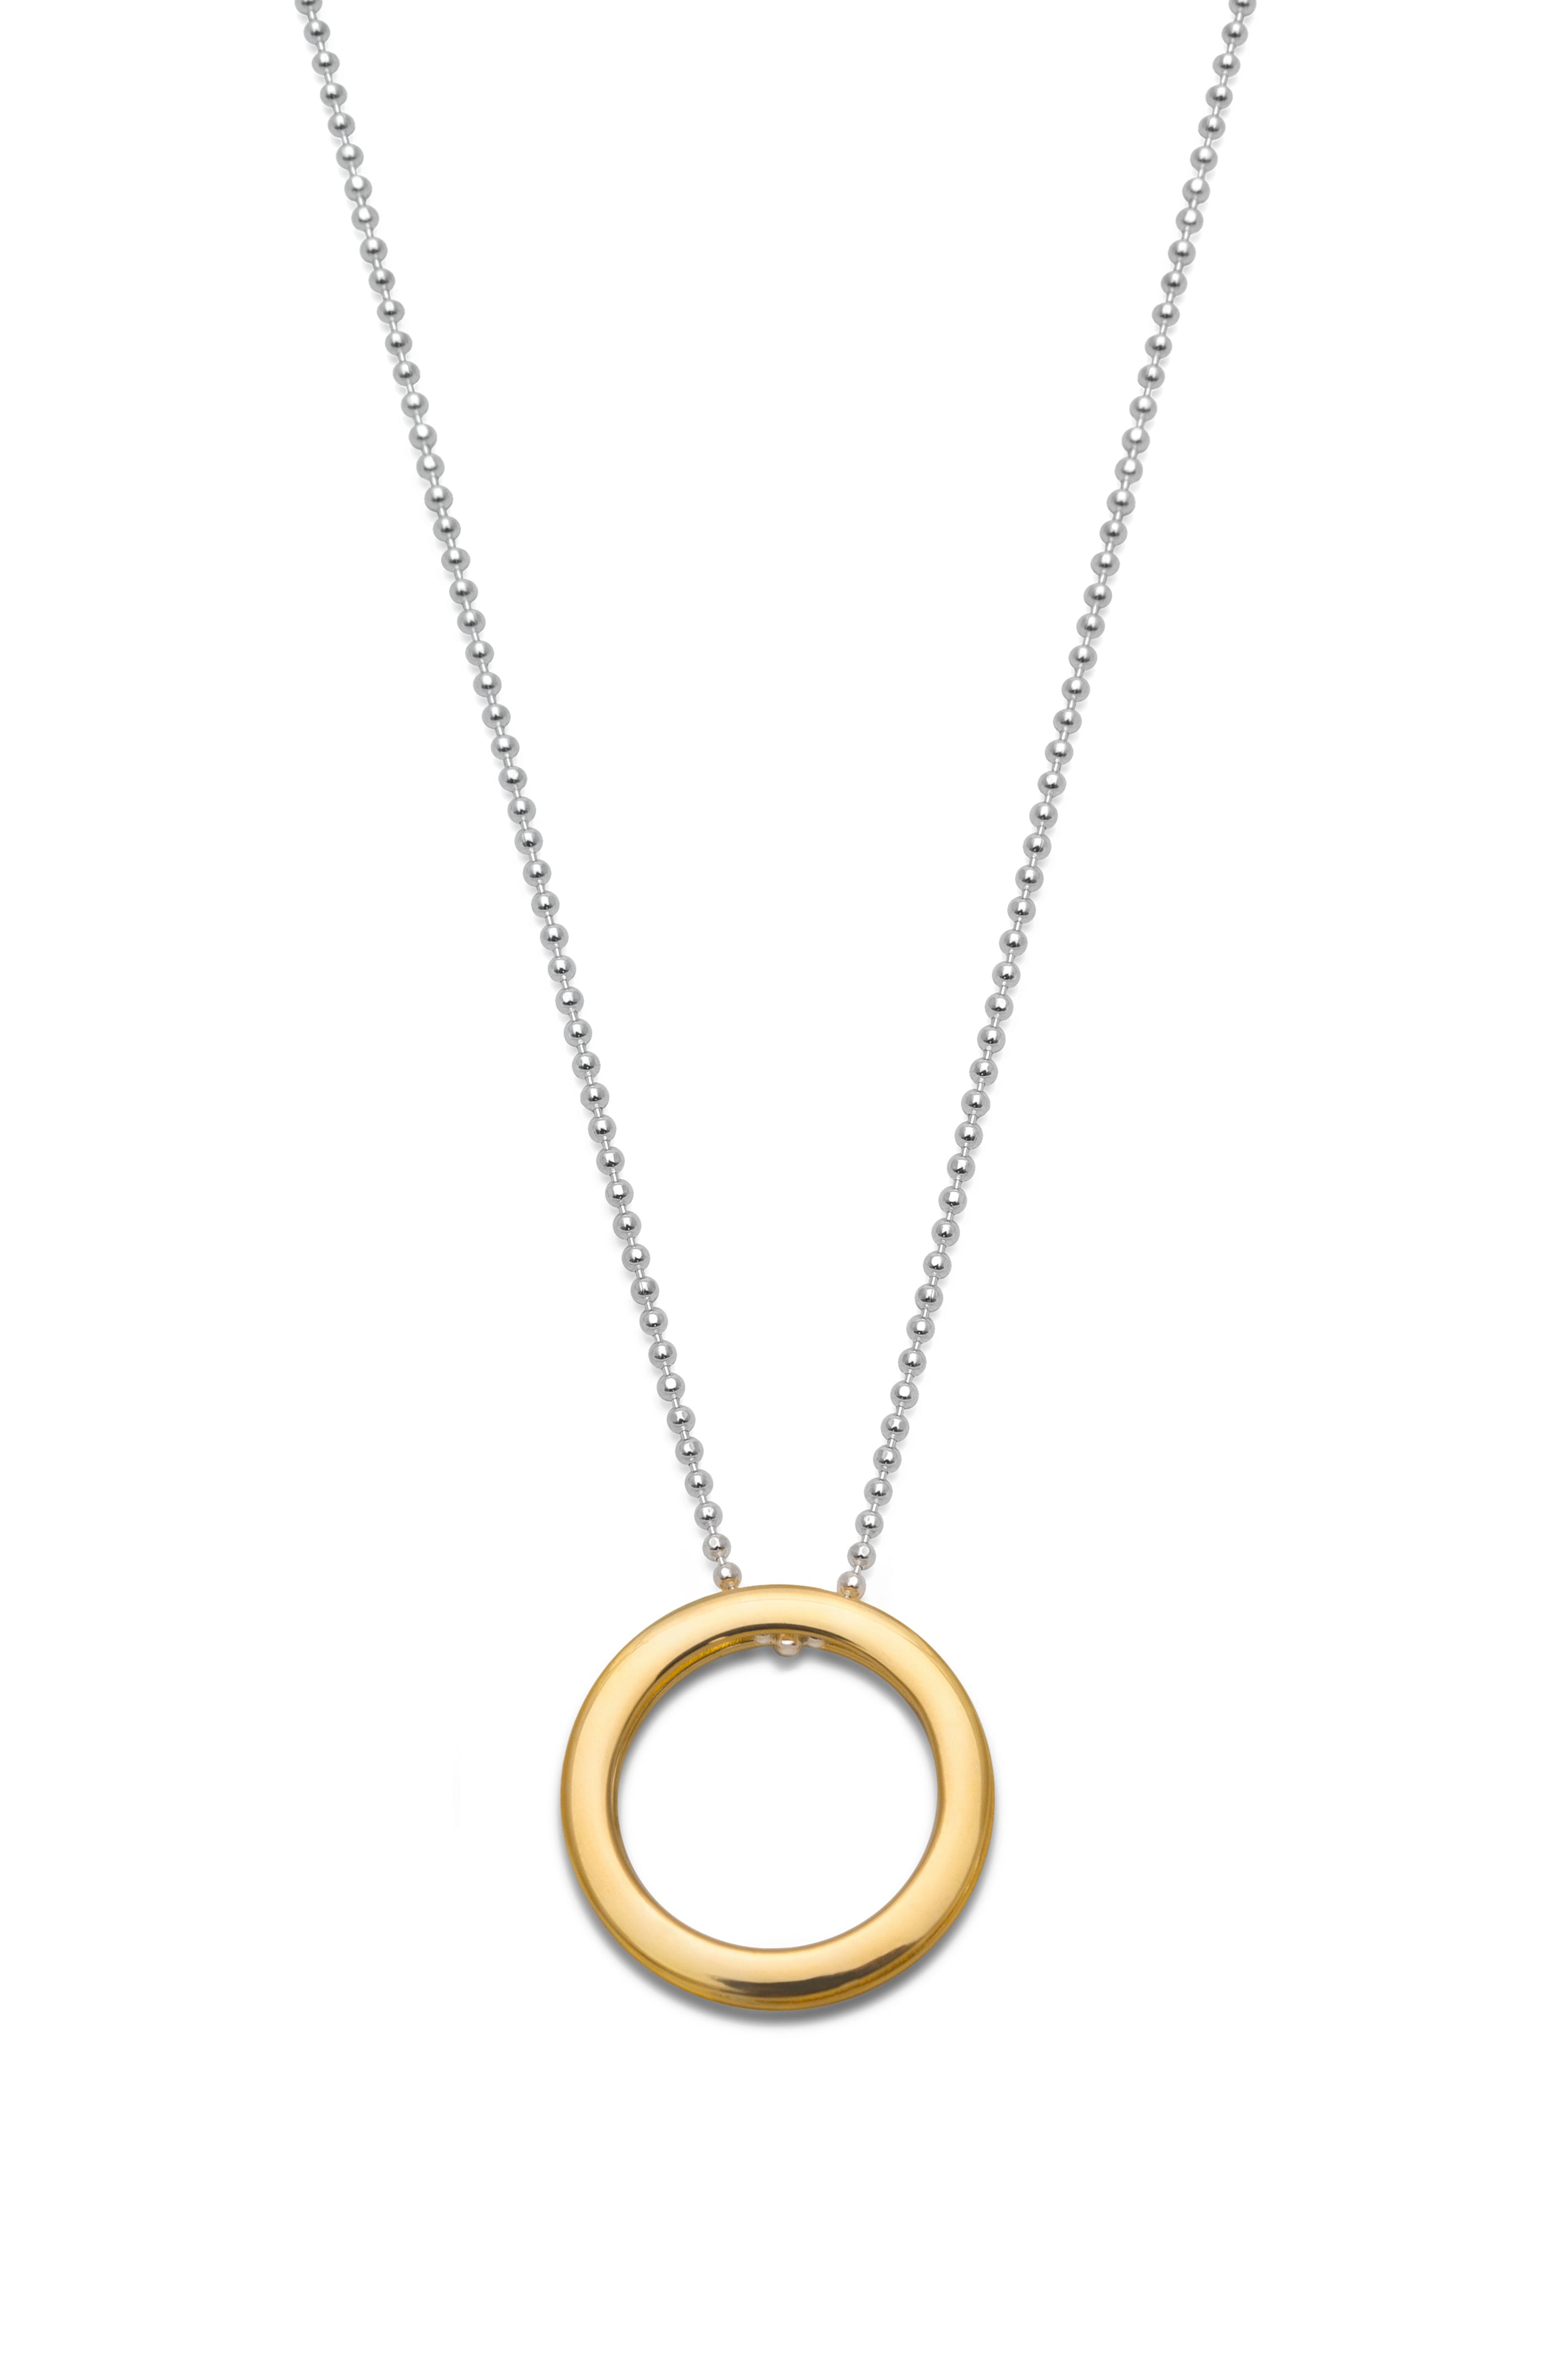 Claudia Lira Jewelry- Link collier gold